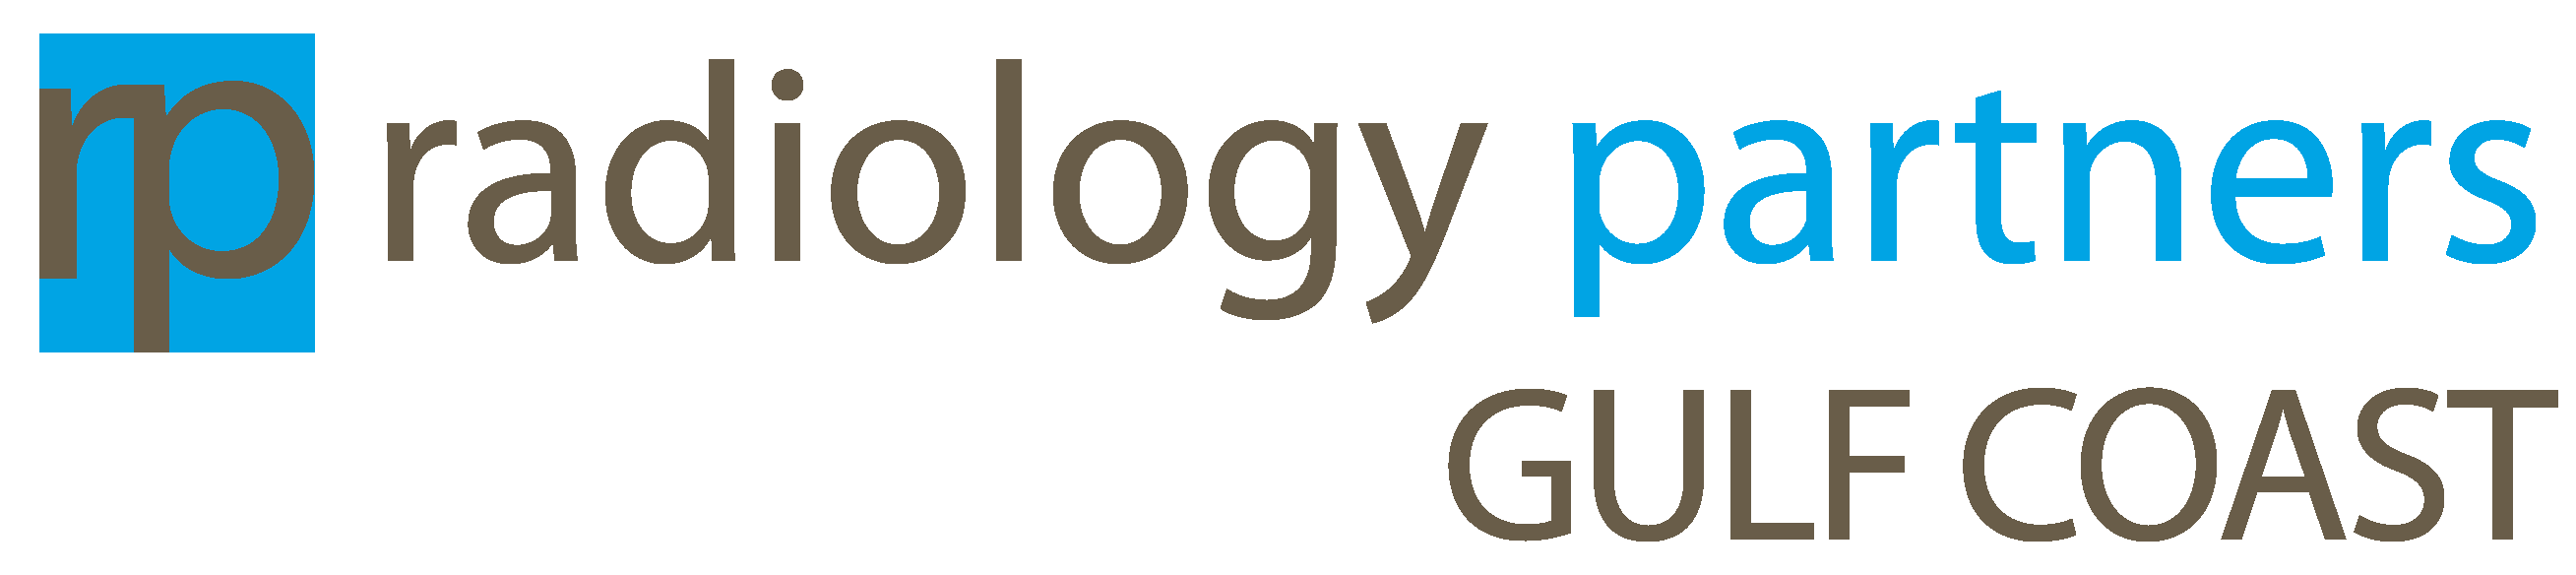 Radiology Partners Gulf Coast